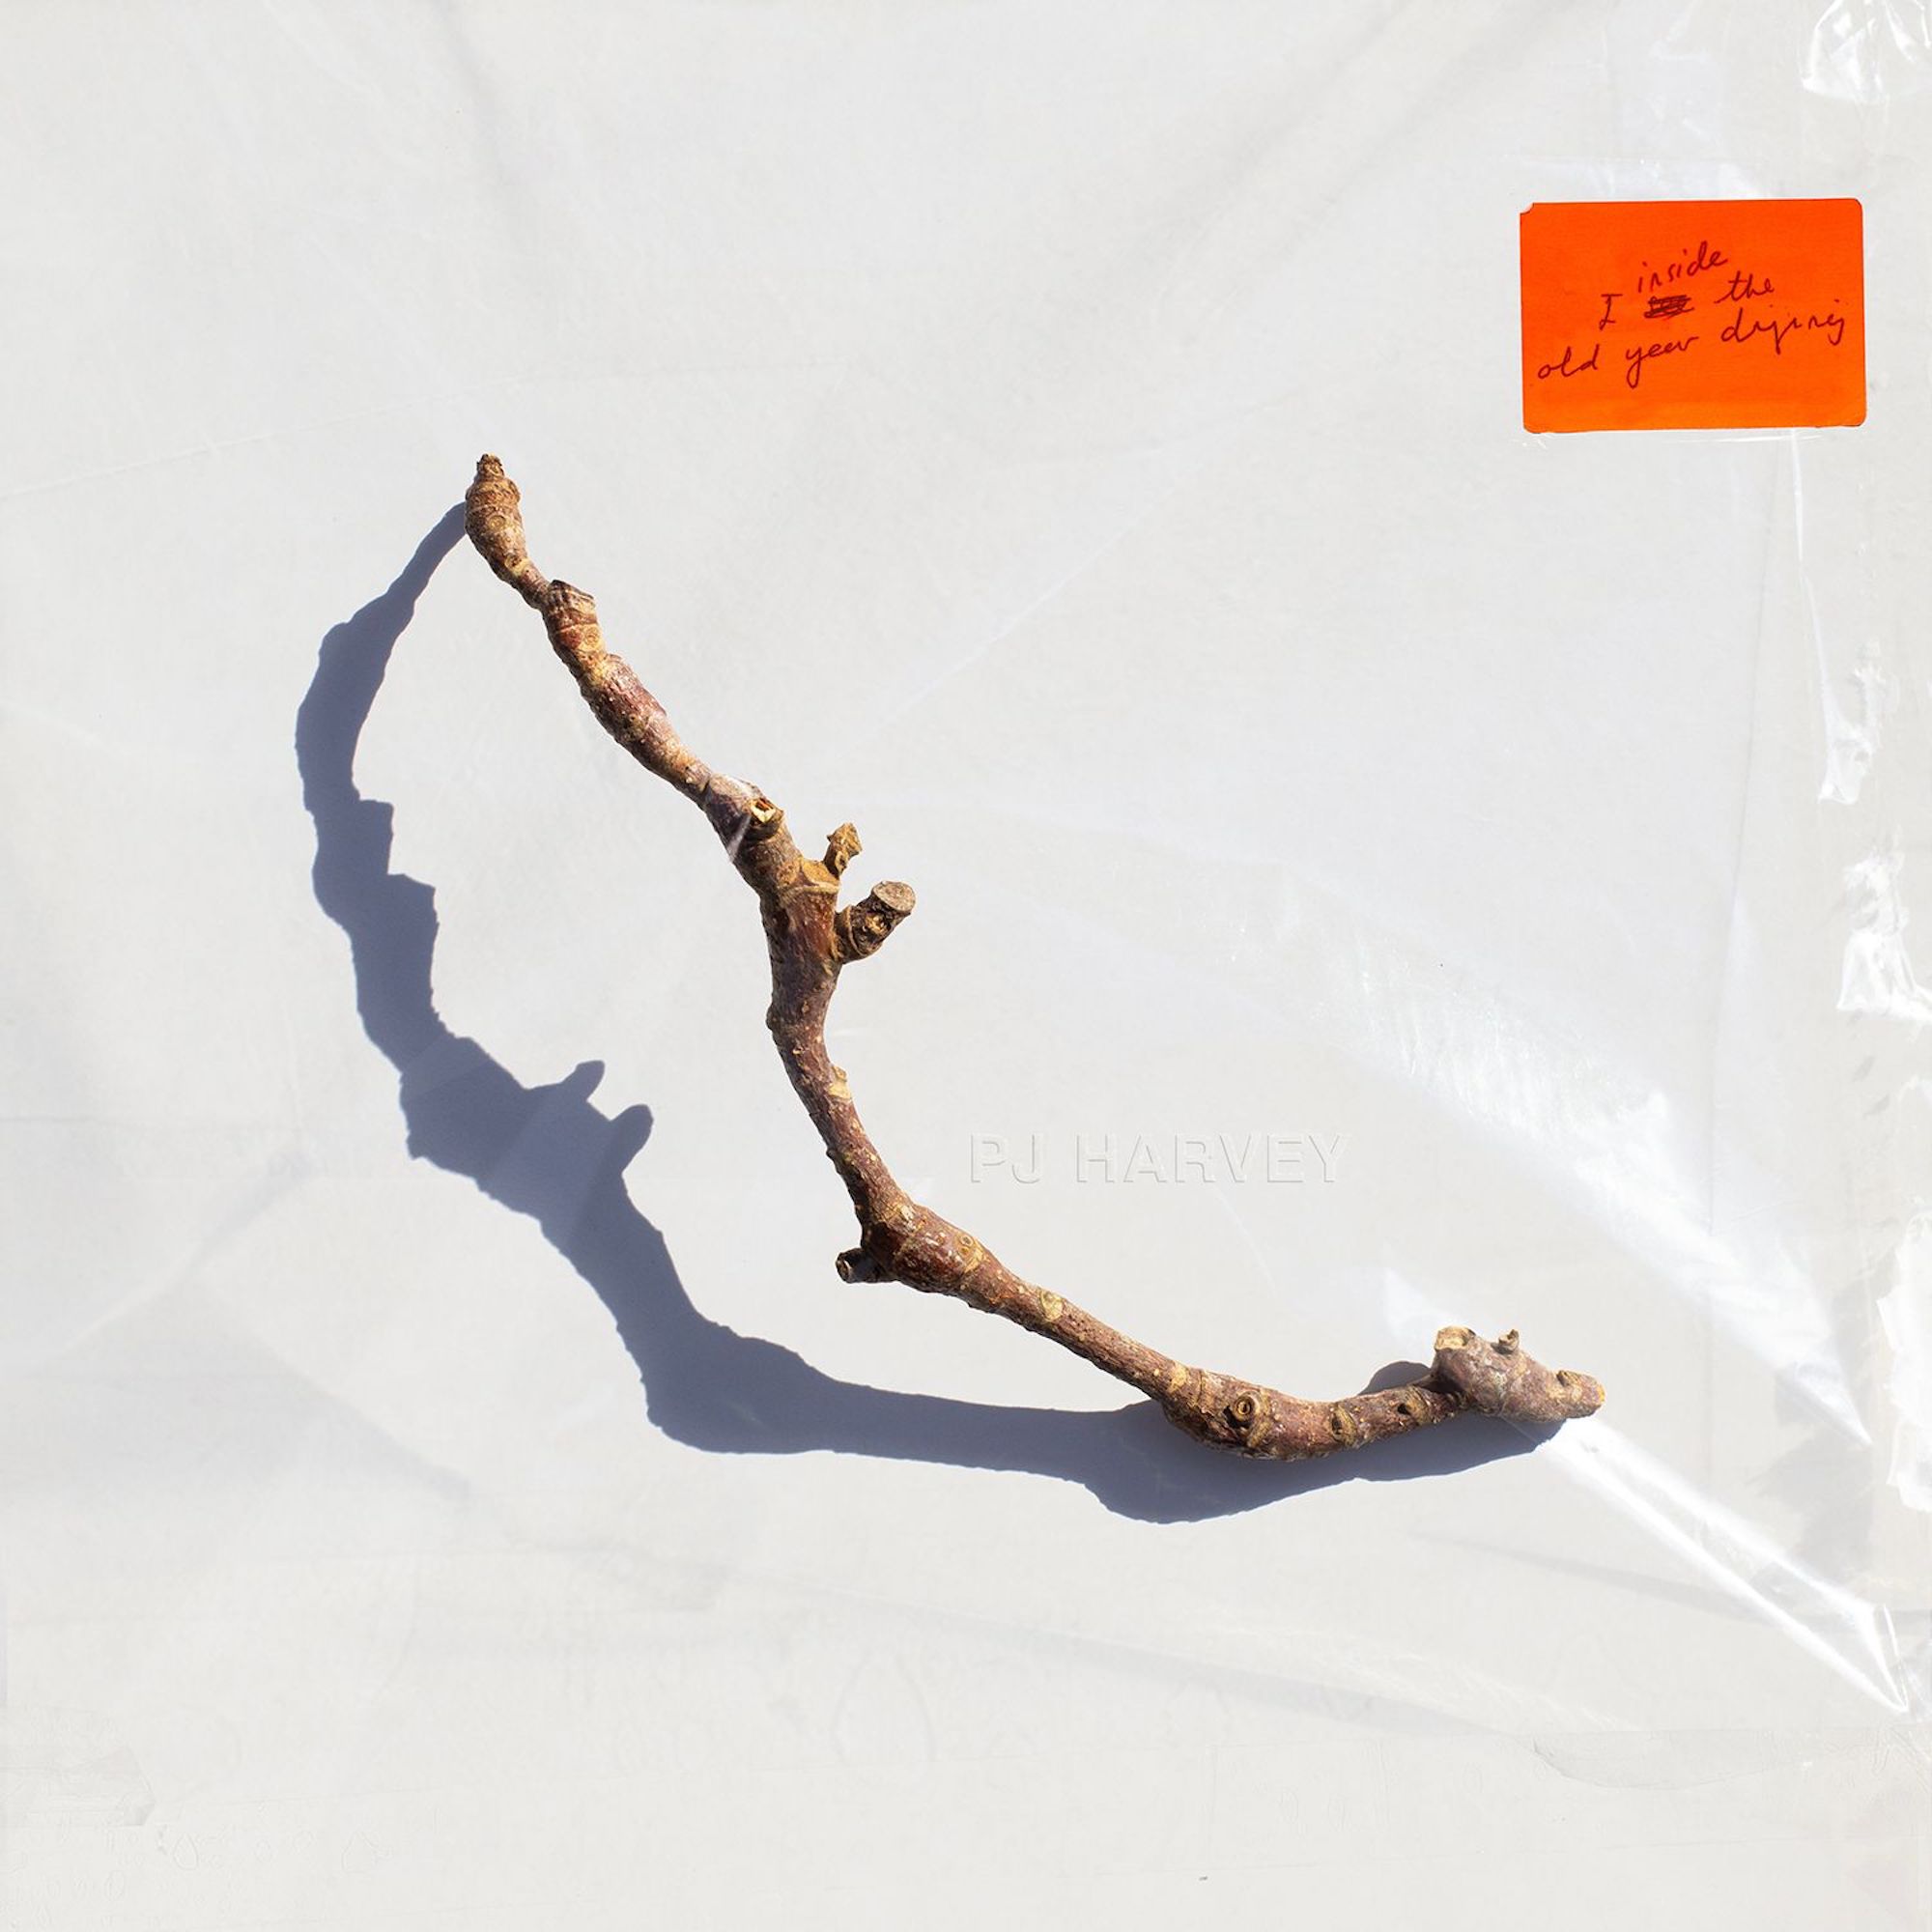 PJ Harvey 'I Inside The Old Year Dying' album artwork